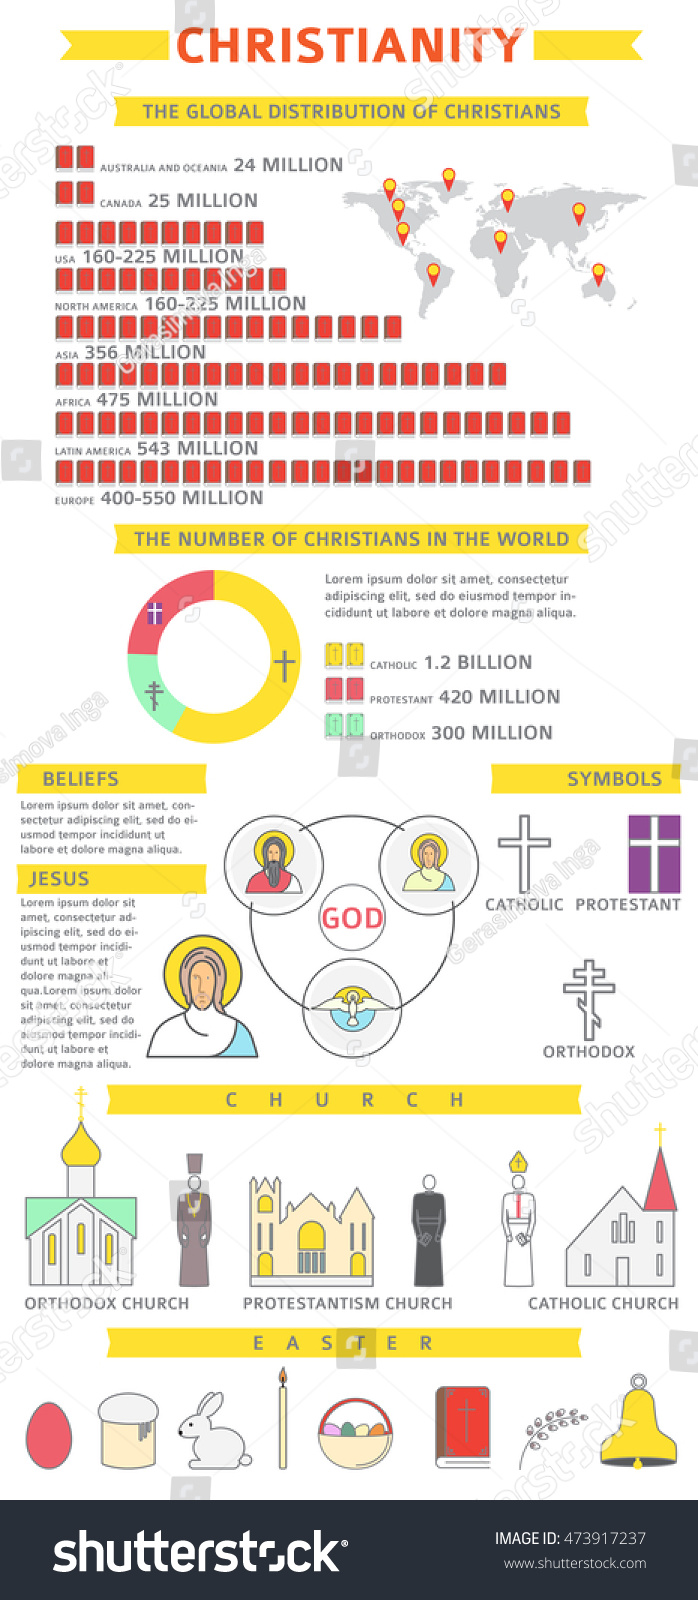 Catholic Vs Christian Beliefs Chart